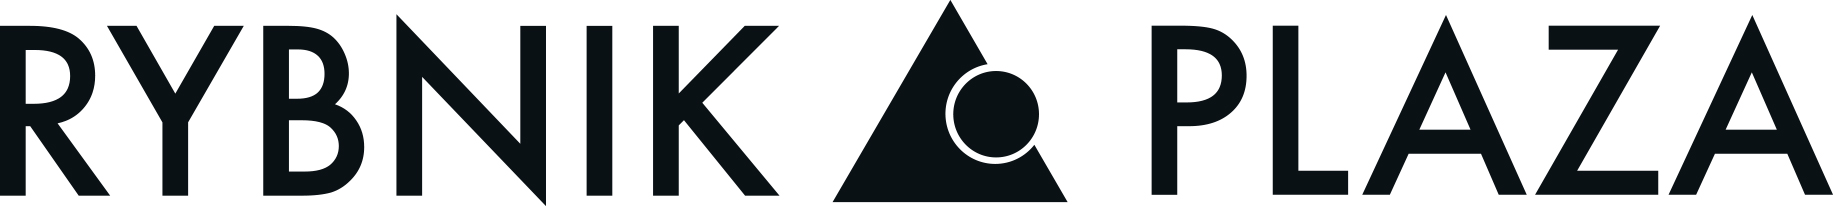 rybnik logo bez claimu